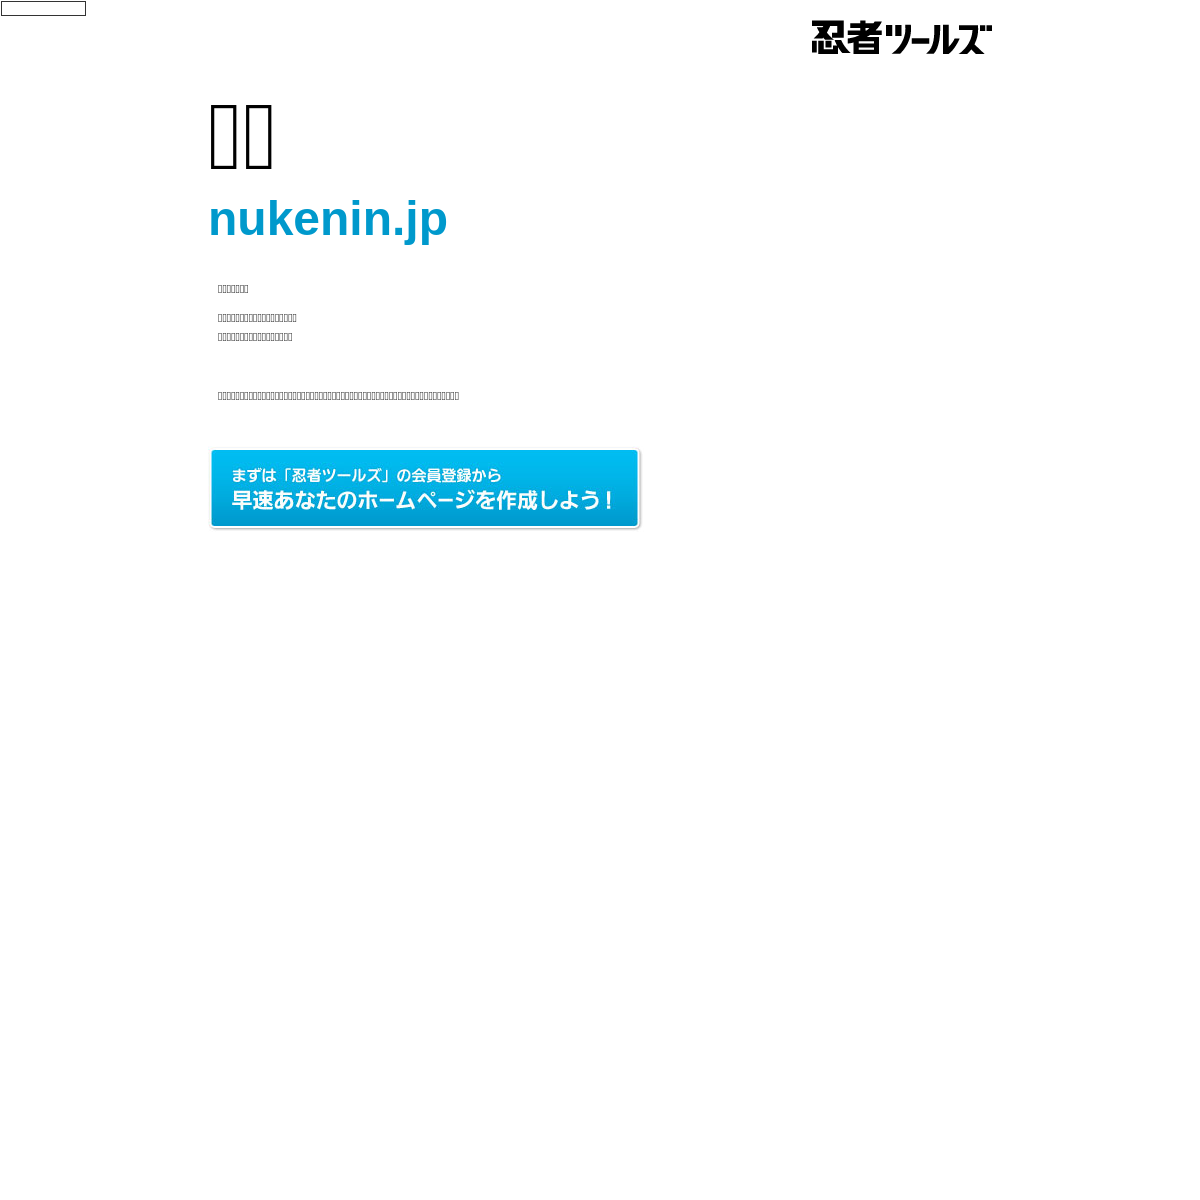 A complete backup of nukenin.jp